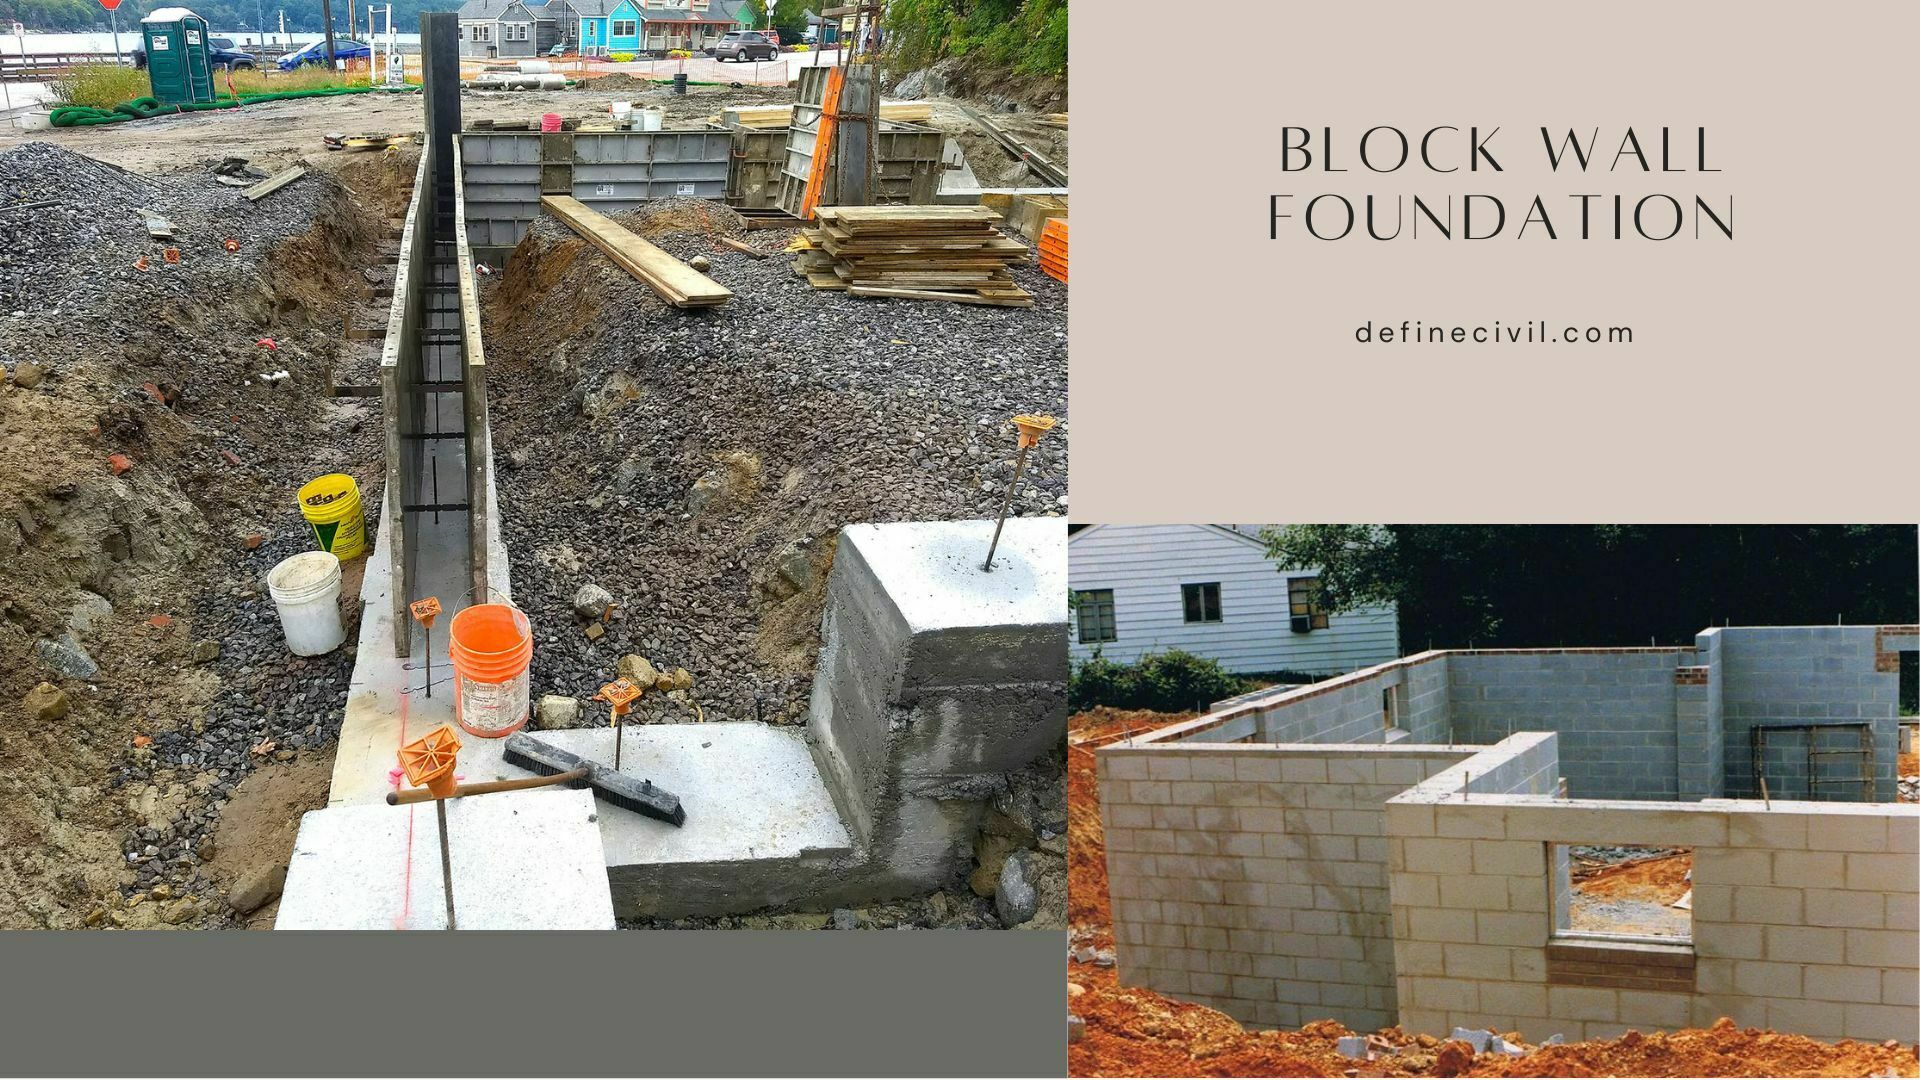 Block wall foundation